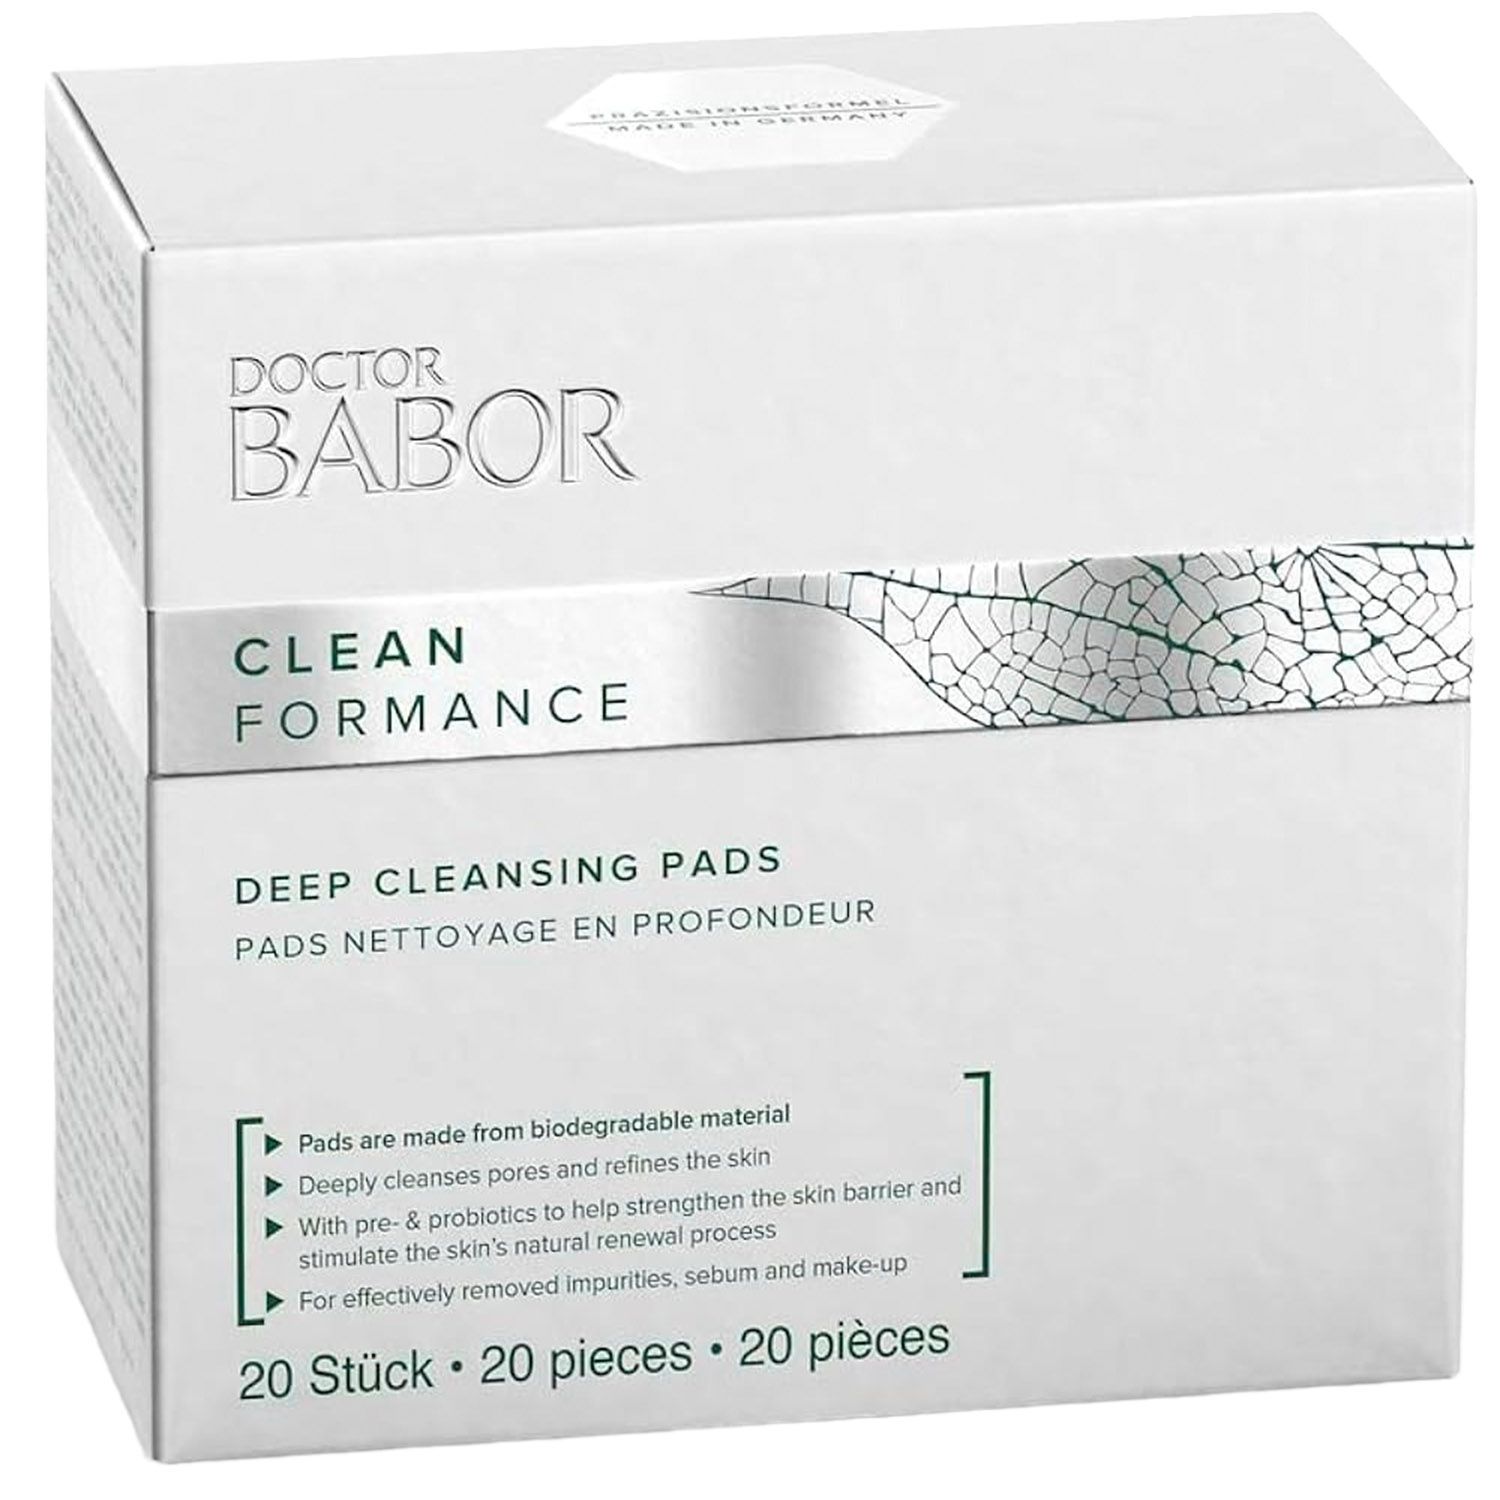 Пади для глибокого очищення шкіри Babor Doctor Babor Clean Formance Deep Cleansing Pads, 20 шт. - фото 2